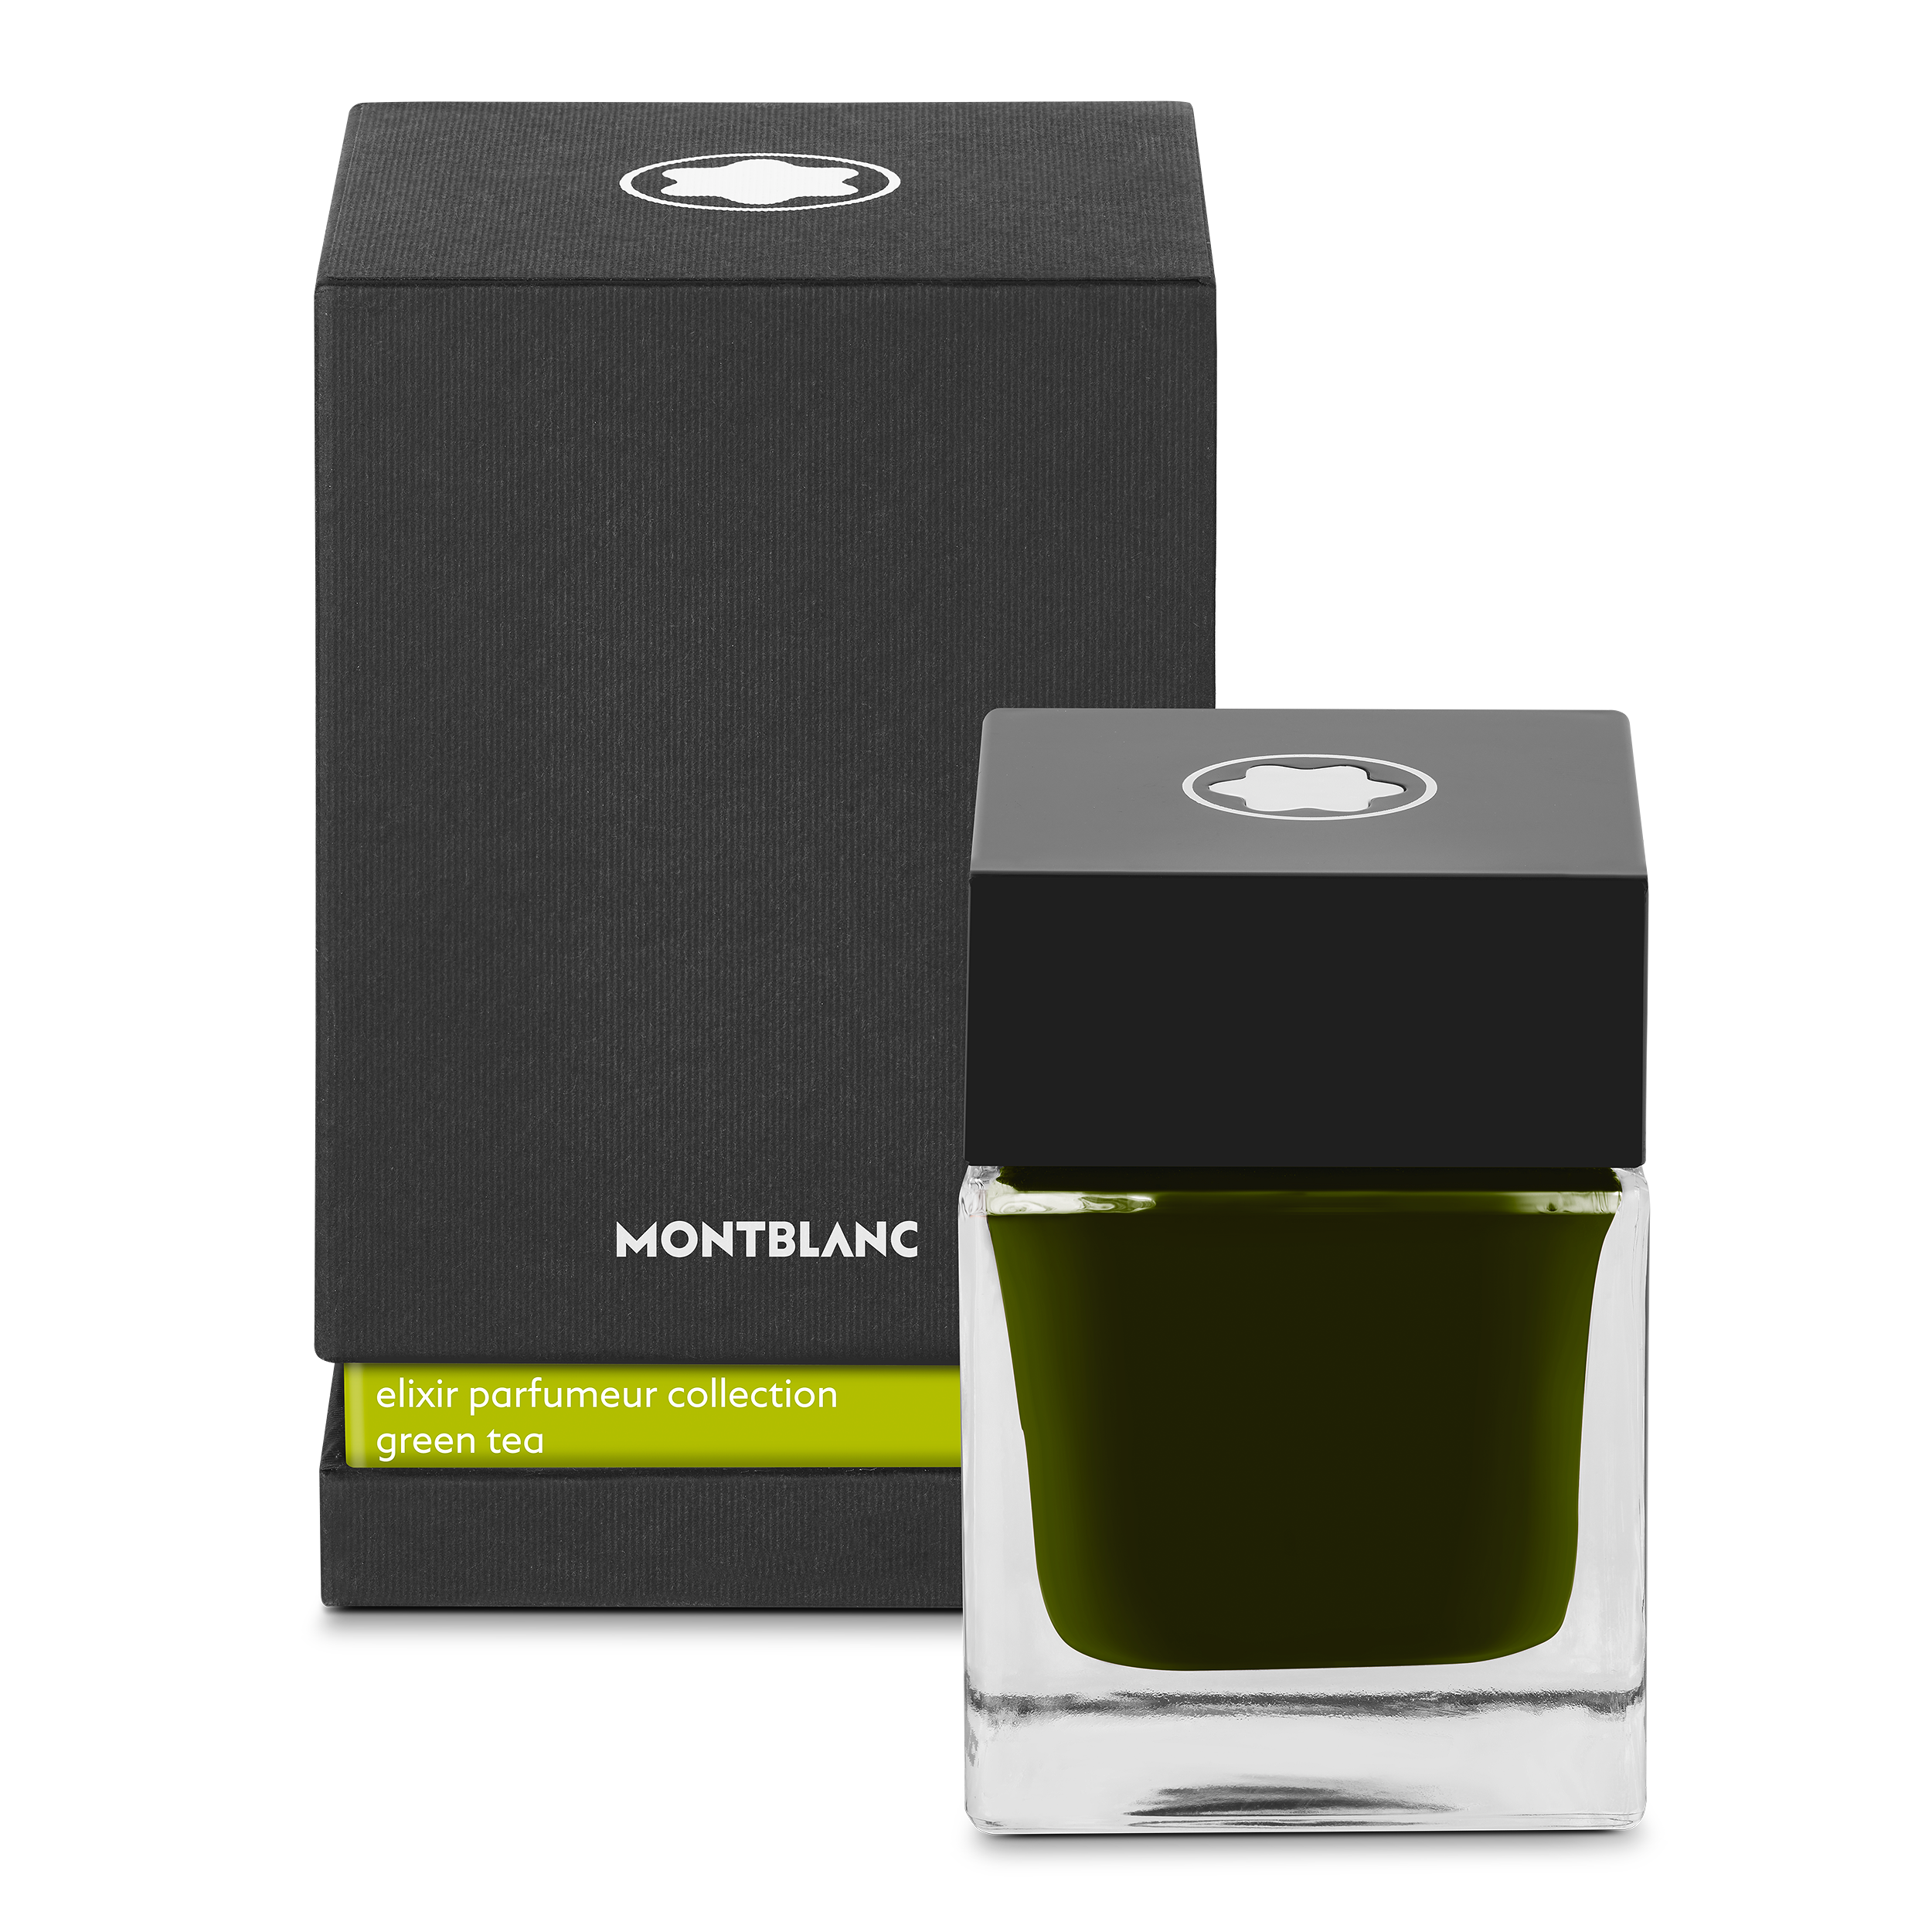 Ink bottle 50ml, green, Elixir parfumeur, green tea scent